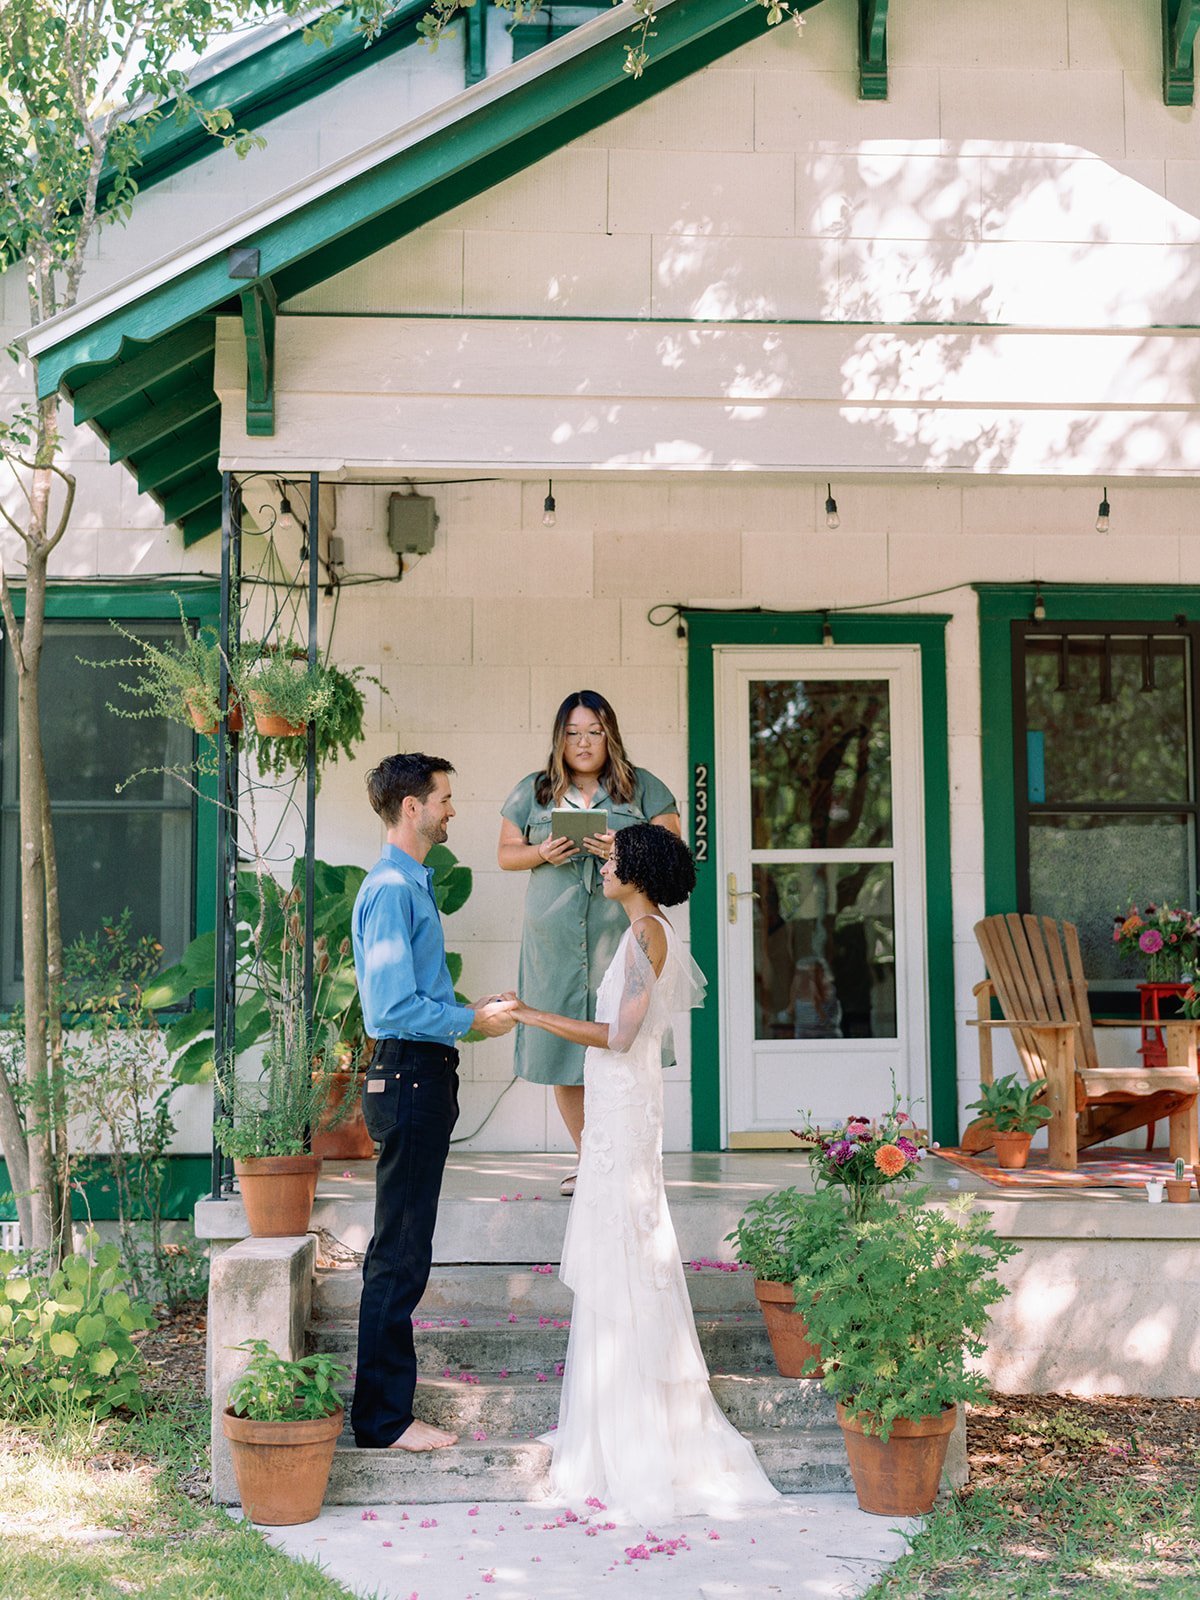 Best-Austin-Wedding-Photographers-Elopement-Film-35mm-Asheville-Santa-Barbara-2.jpg